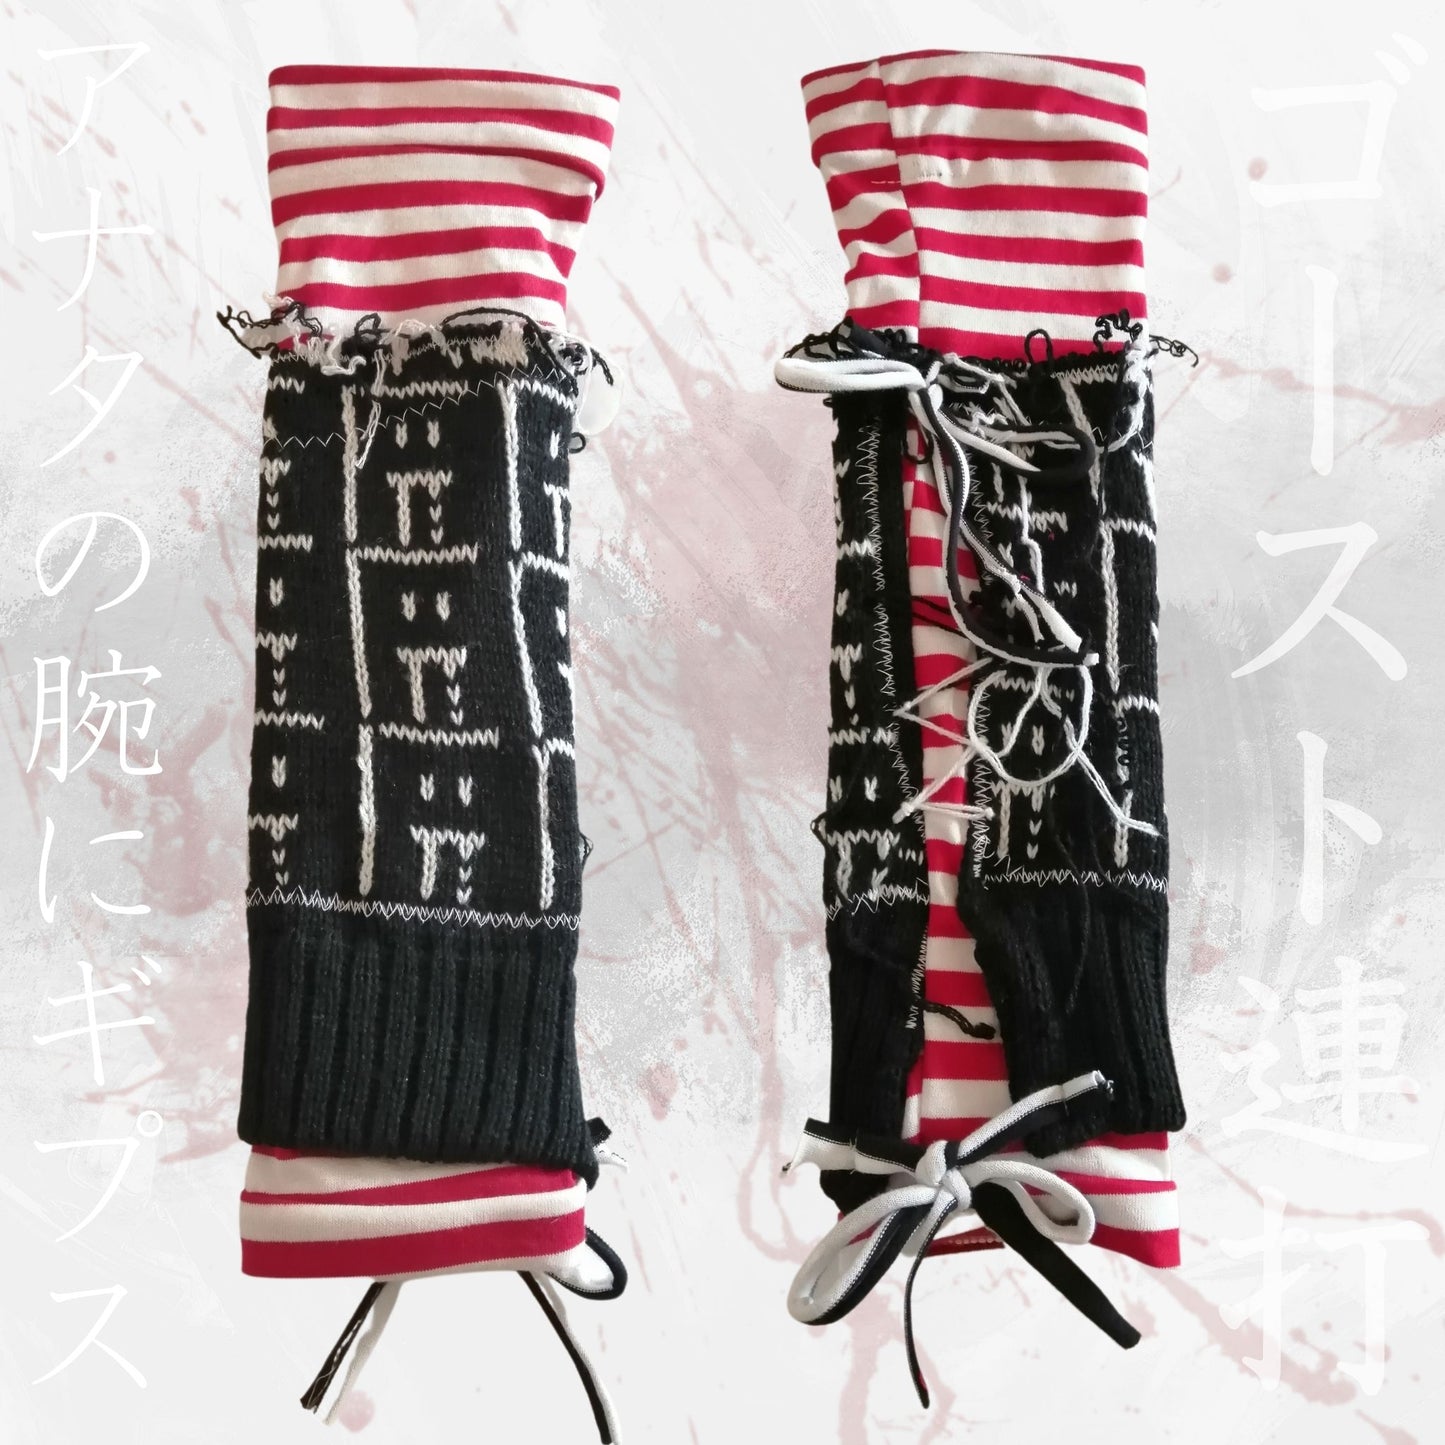 Ghost faces! Blabla Original Knit Design Stripe Arm Cover -Sold individually